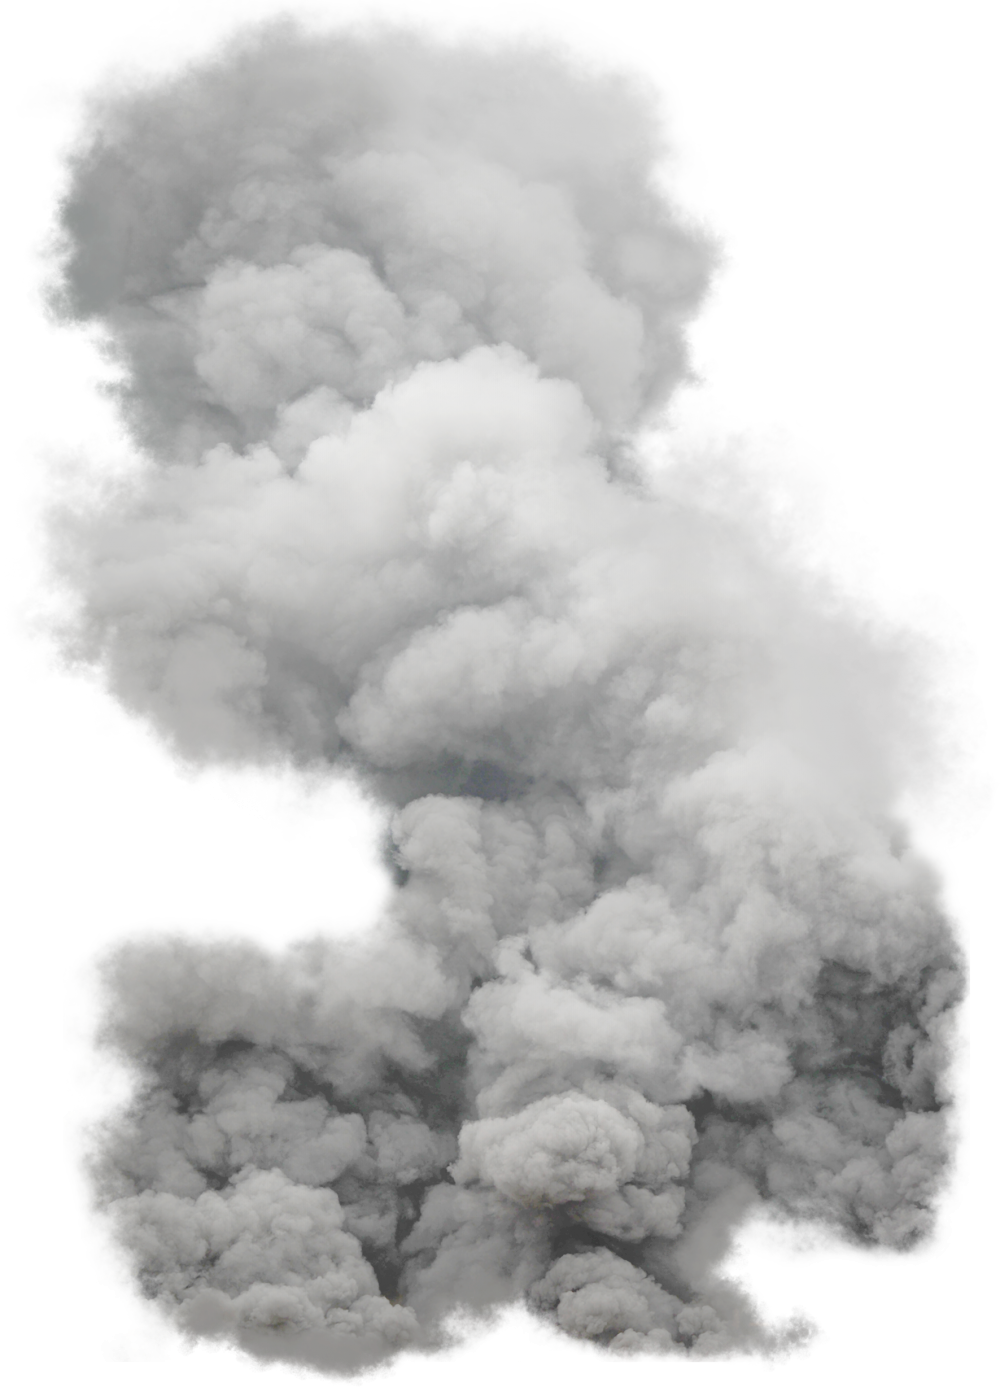 A Cloud Of Smoke On A Black Background